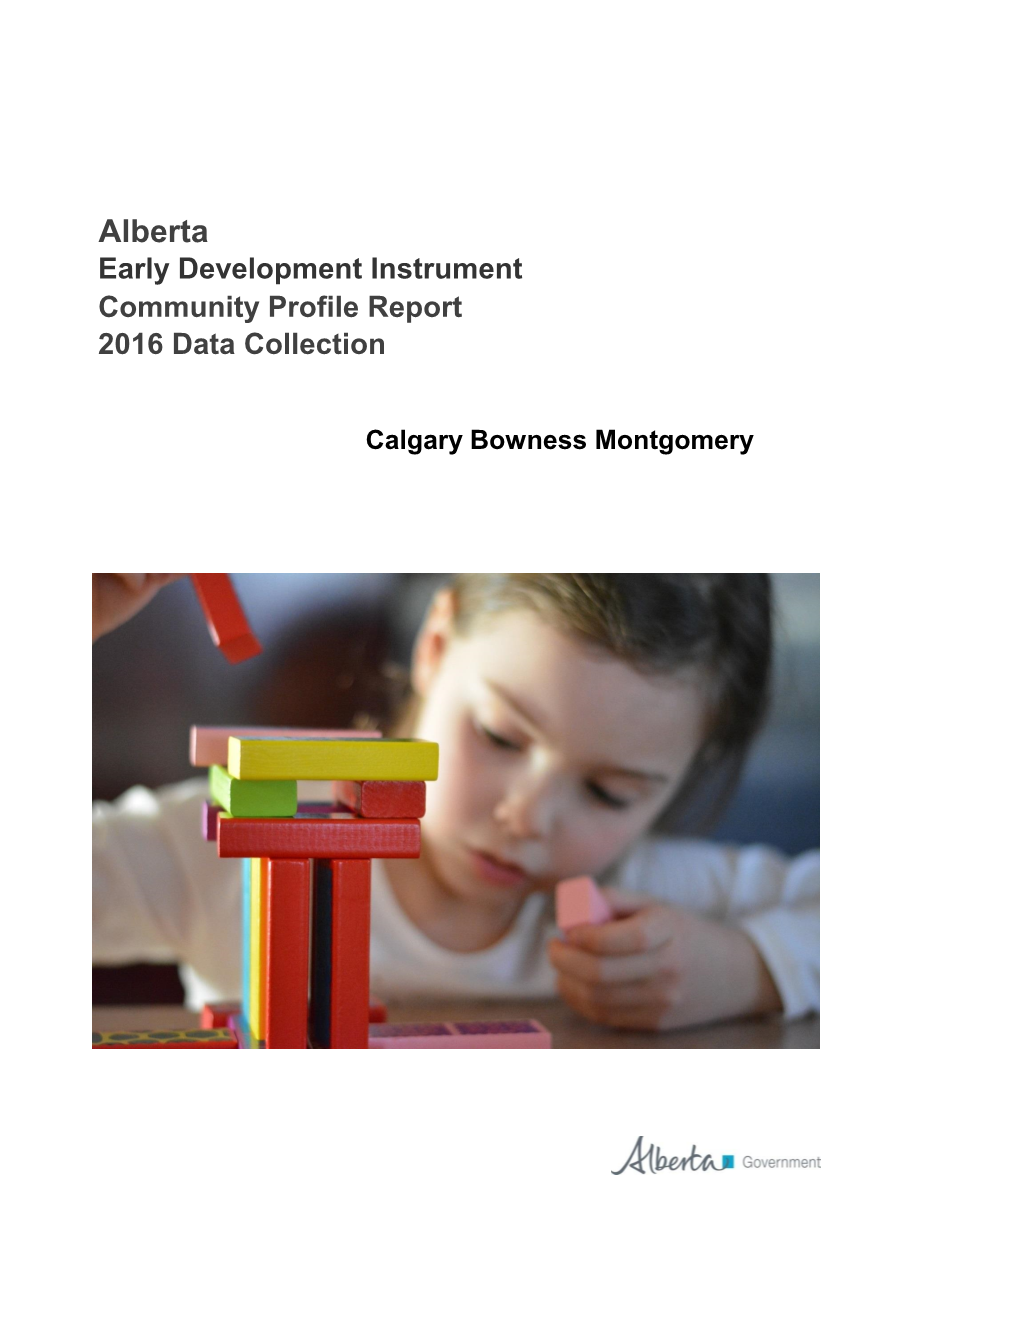 Calgary Bowness Montgomery Alberta Health February 2018 EDI Community Profile: CALGARY BOWNESS MONTGOMERY